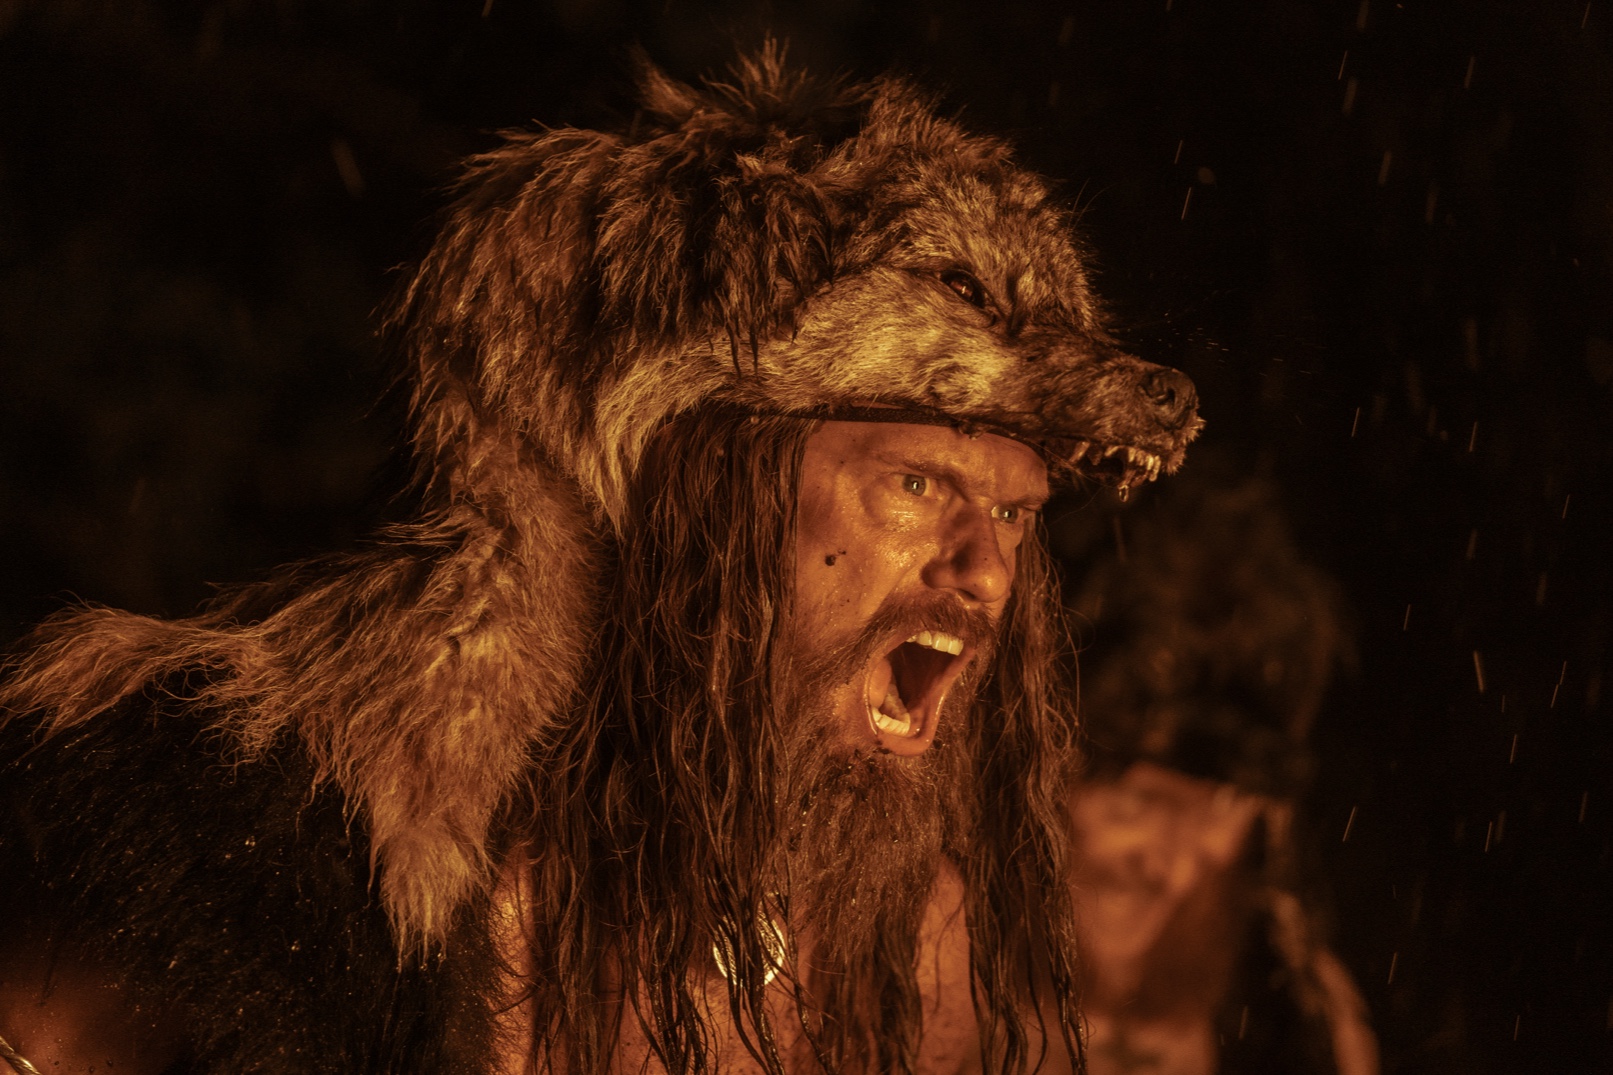 Alexander Skarsgård as Amleth (image courtesy of Focus Features)